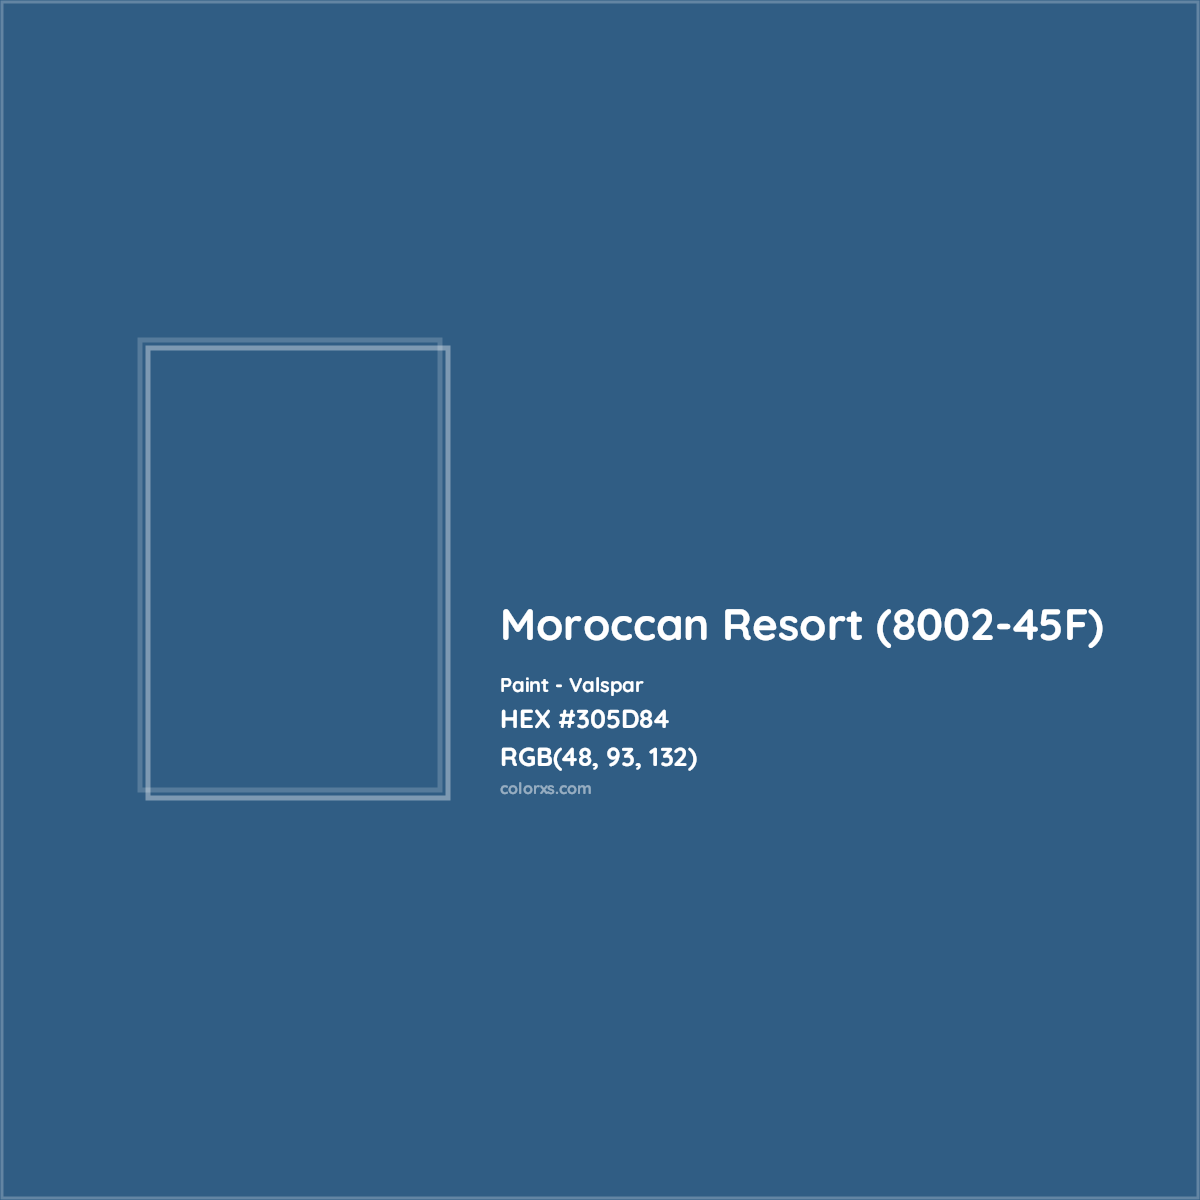 HEX #305D84 Moroccan Resort (8002-45F) Paint Valspar - Color Code